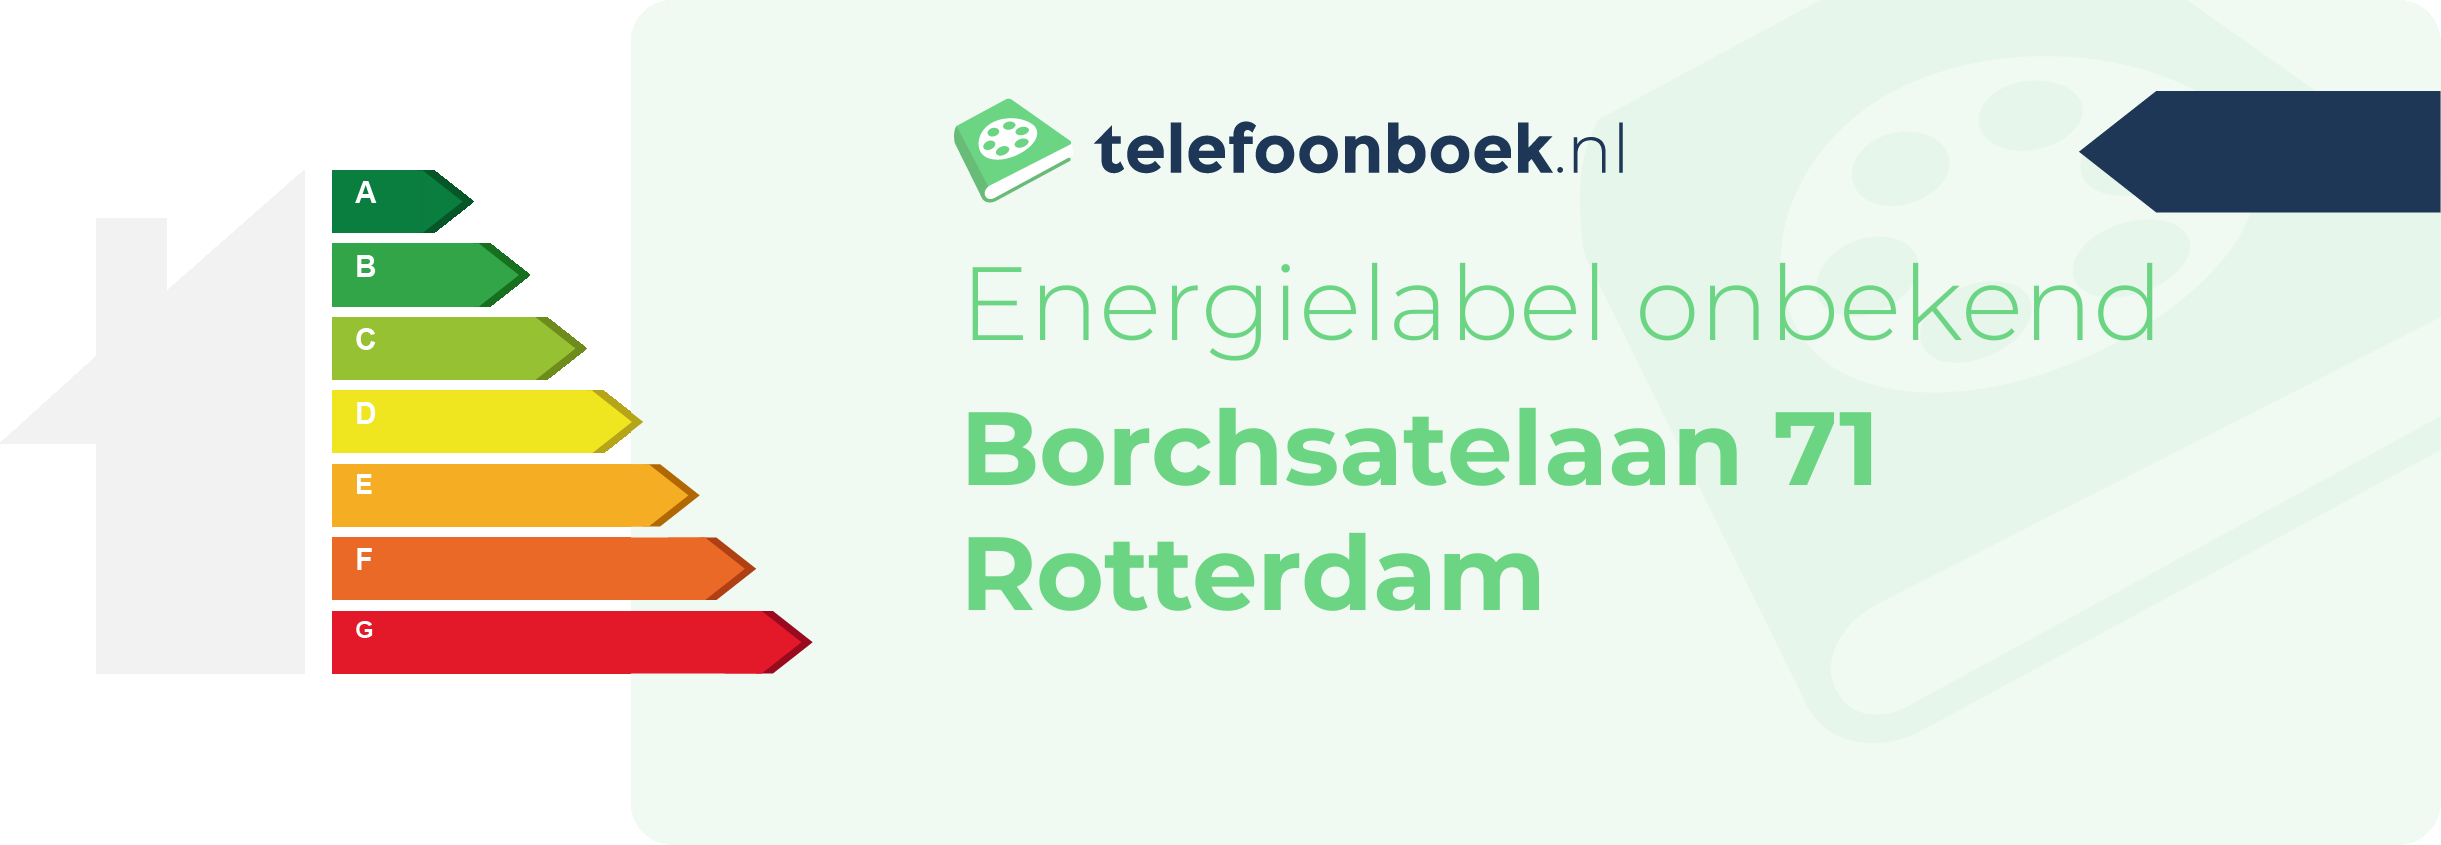 Energielabel Borchsatelaan 71 Rotterdam